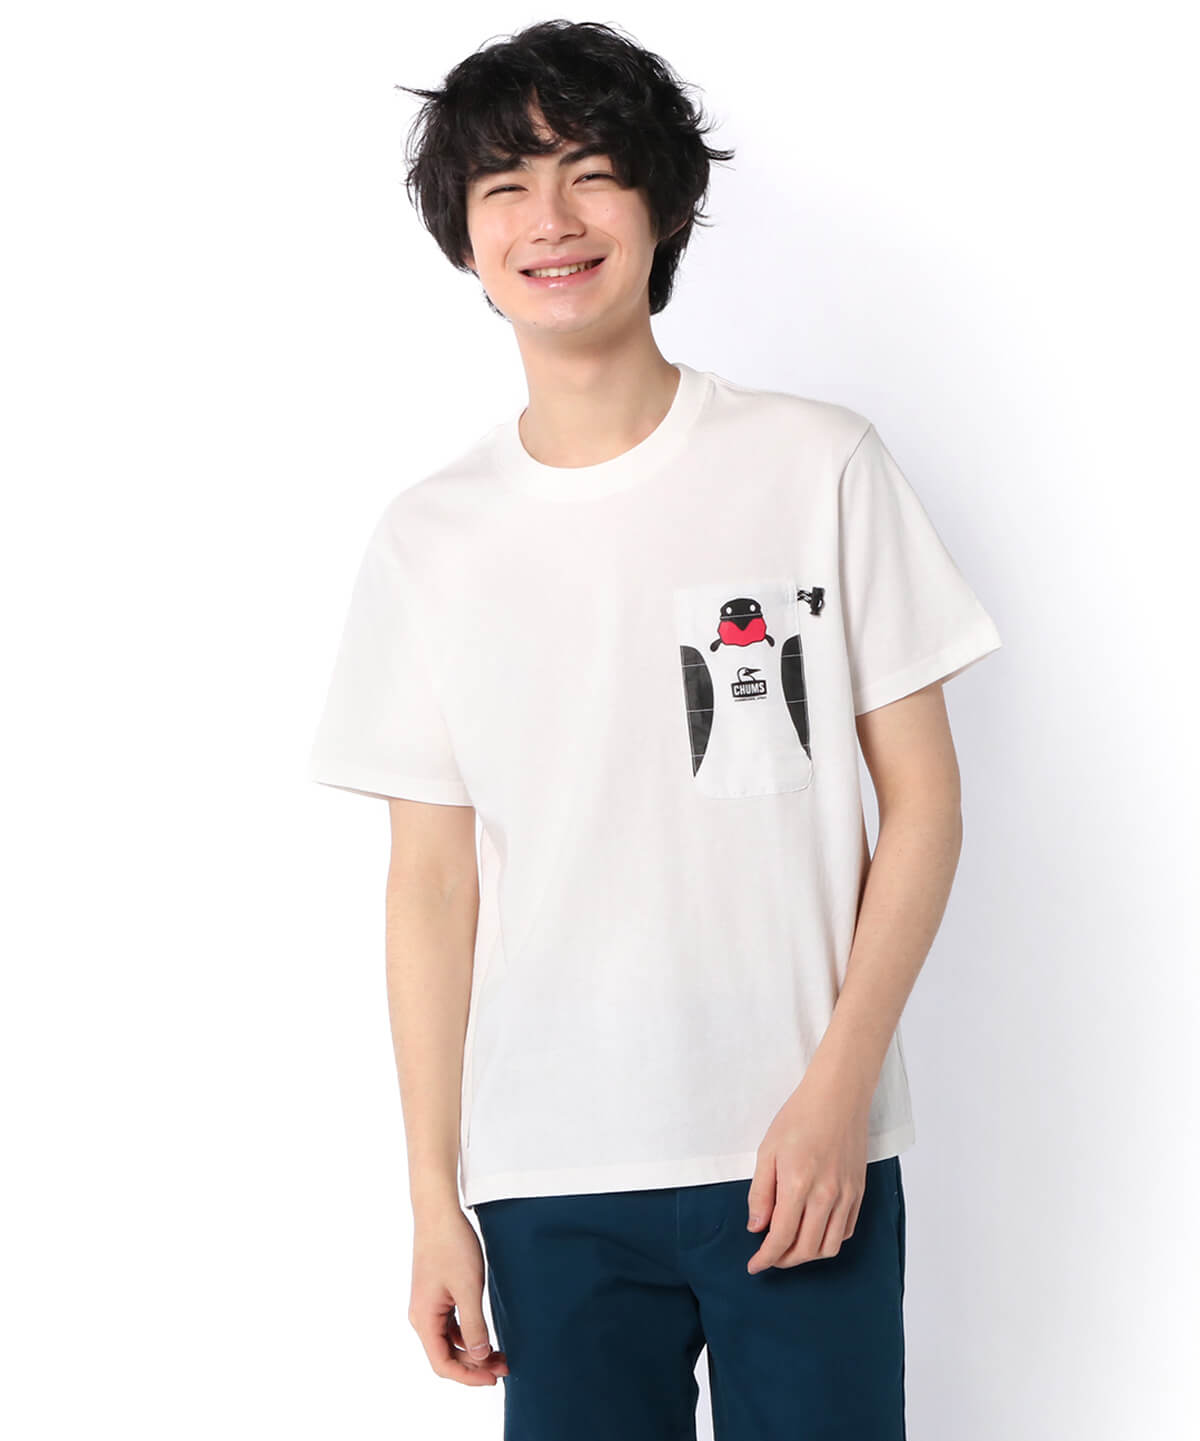 Sleeping Bag Pocket T Shirt 限定 スリーピングバッグポケットtシャツ トップス Tシャツ M Chums Logo トップス Chums チャムス アウトドアファッション公式通販